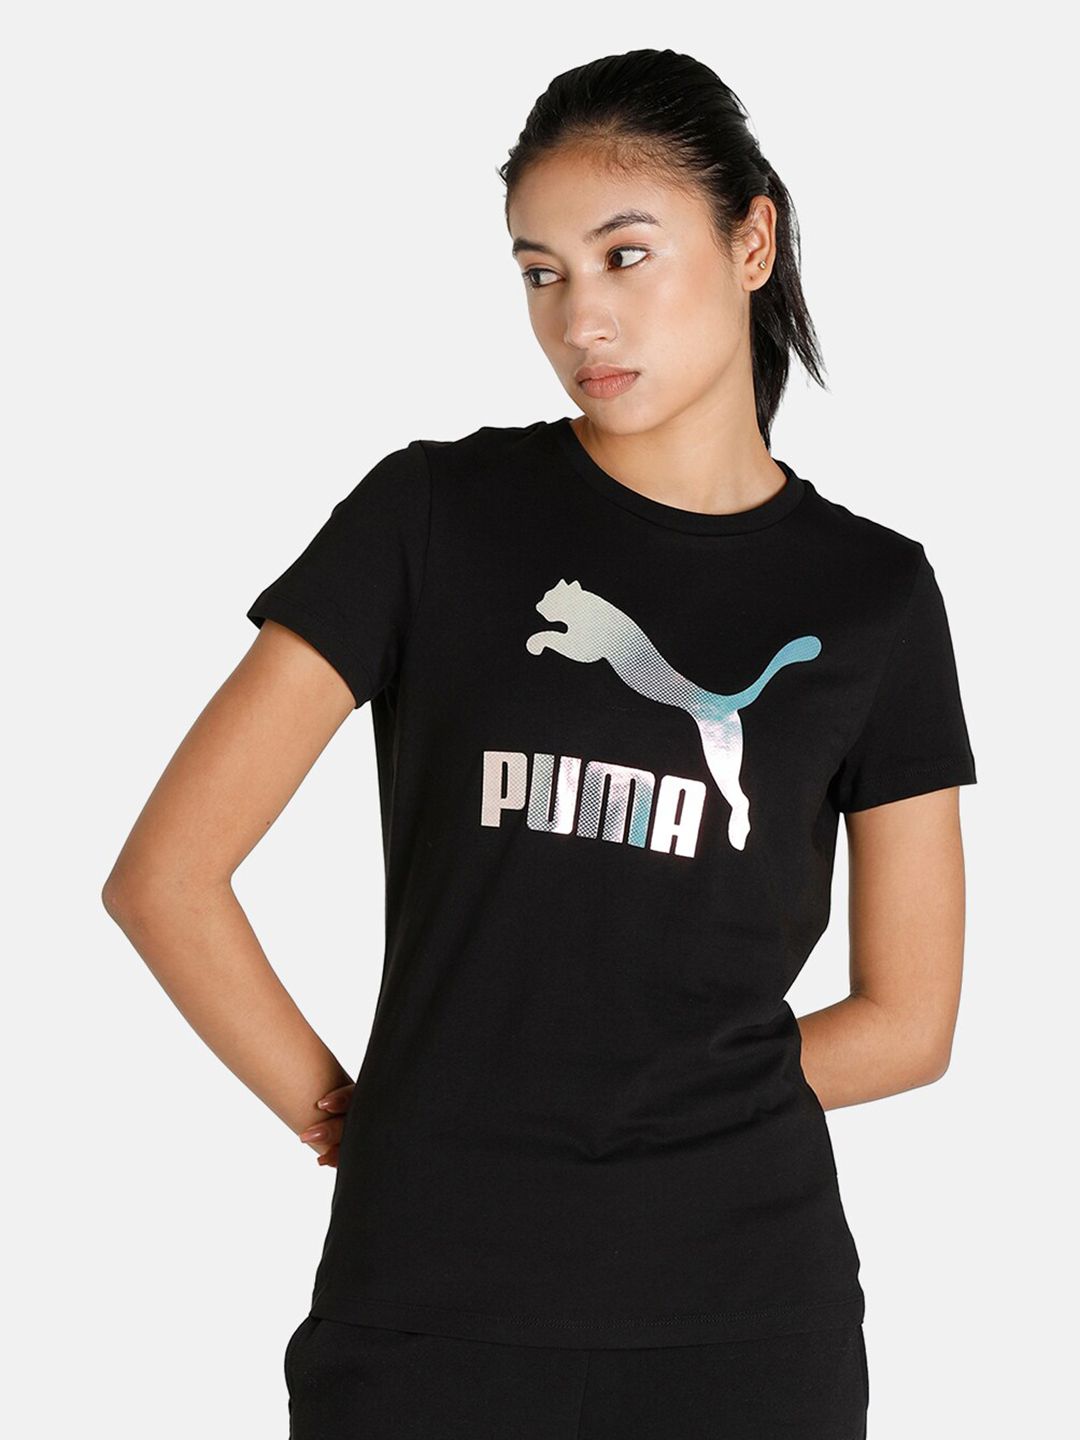 Puma Women Black & Silver-Toned Brand Logo Printed T-shirt Price in India